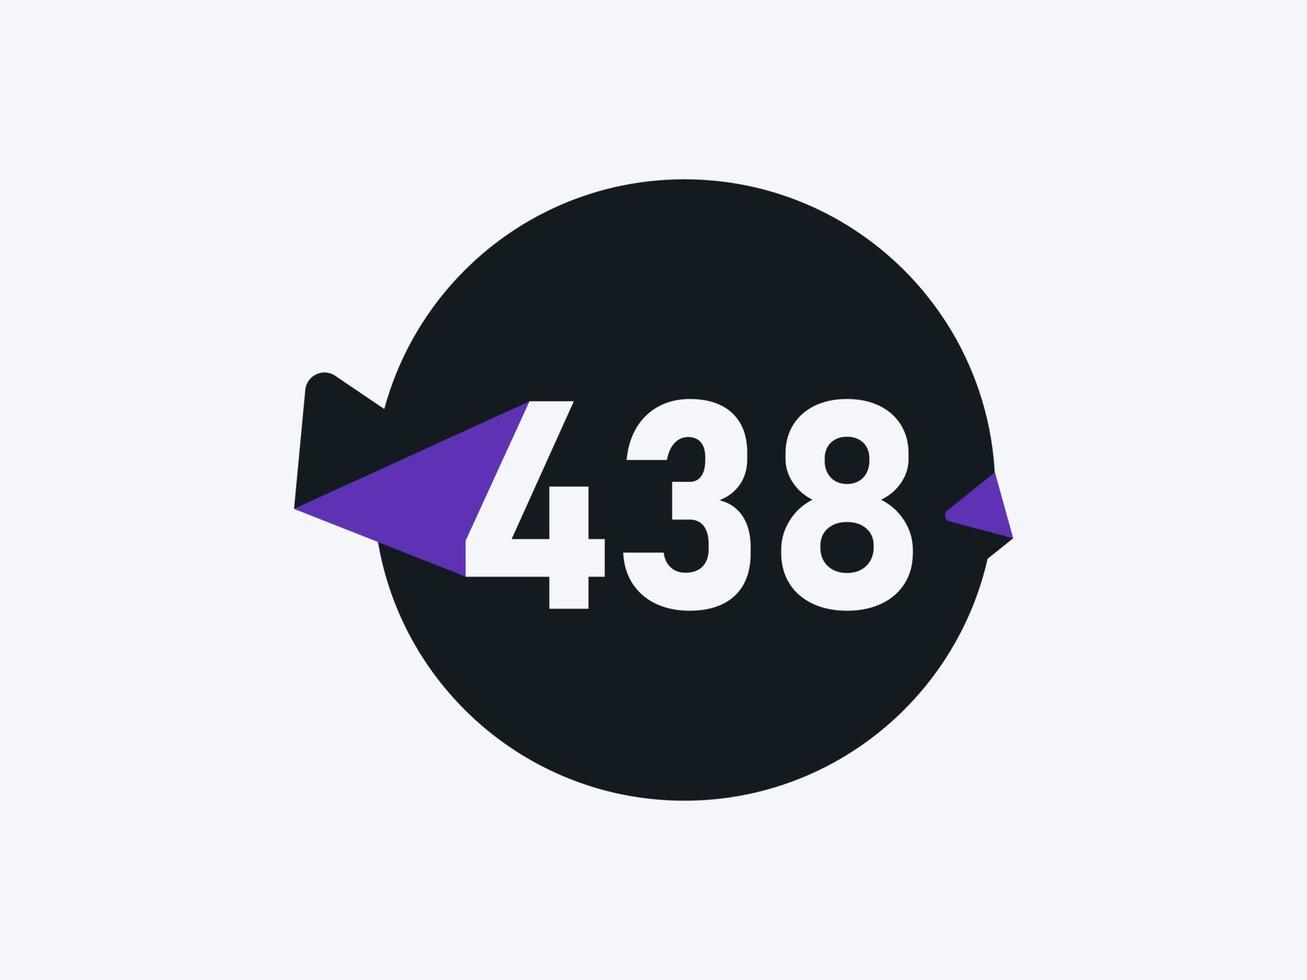 438 Number logo icon design vector image. Number logo icon design vector image